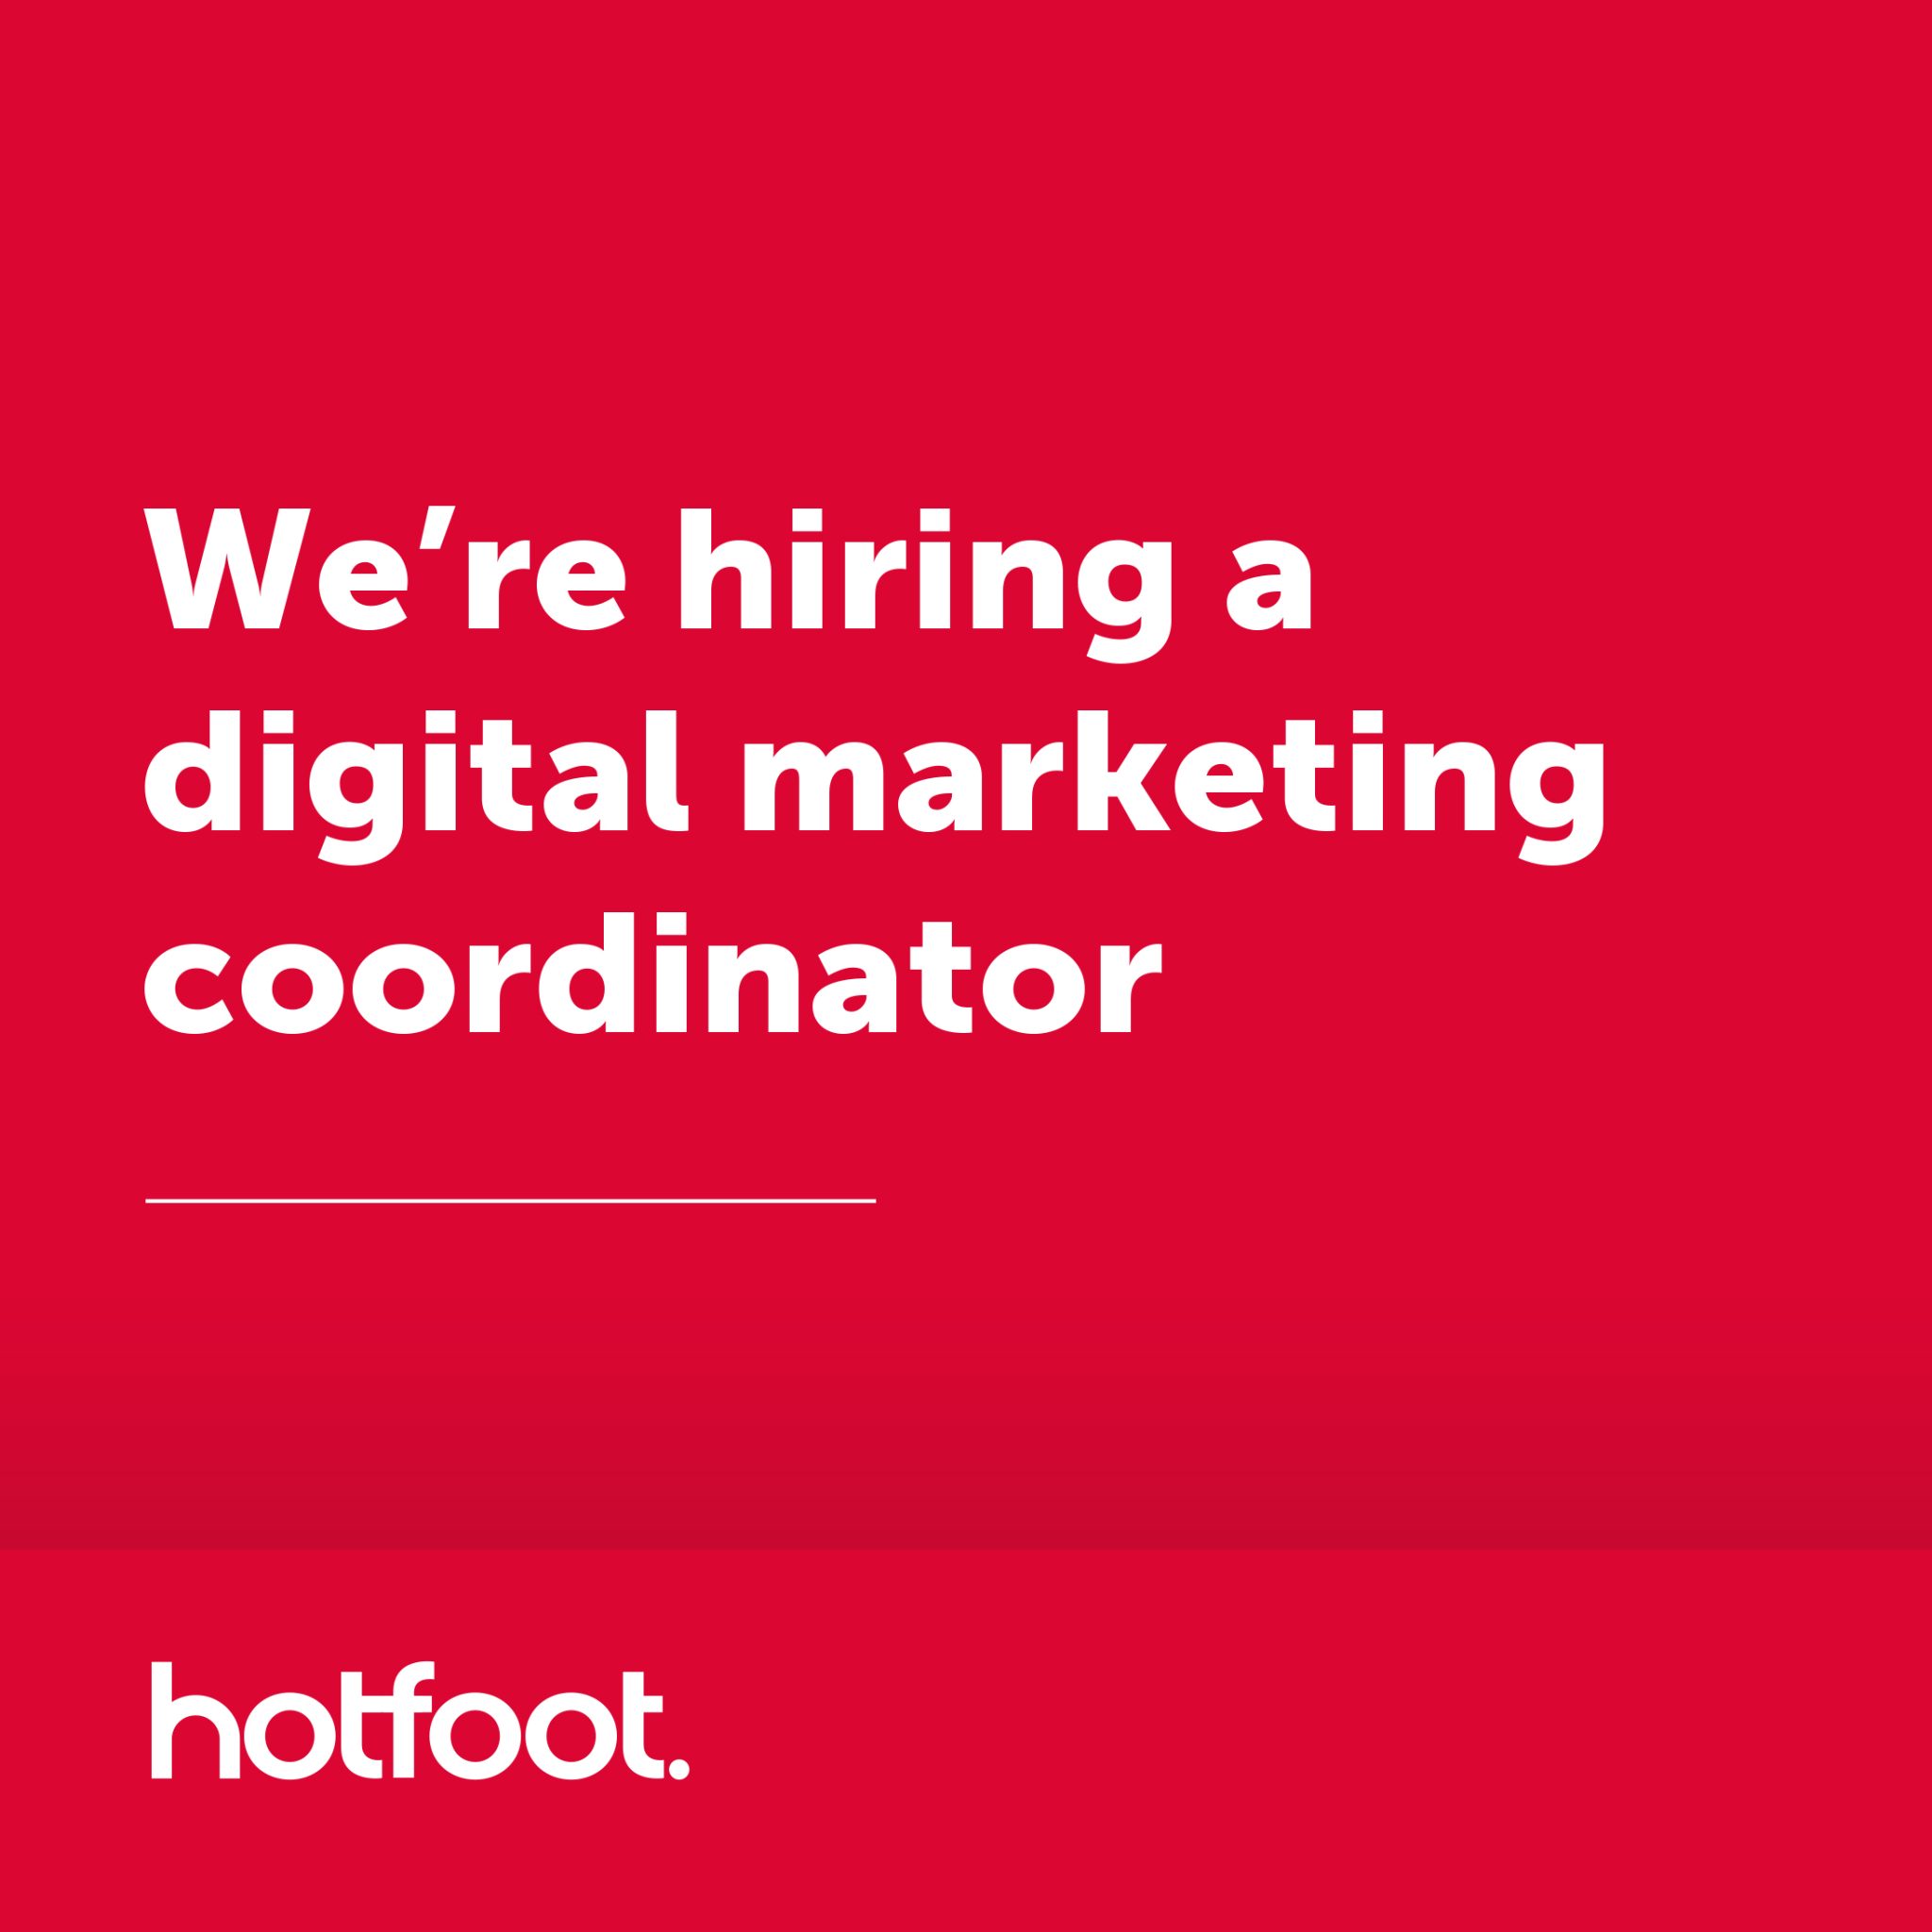 We’re hiring a digital marketing coordinator with a focus on social media